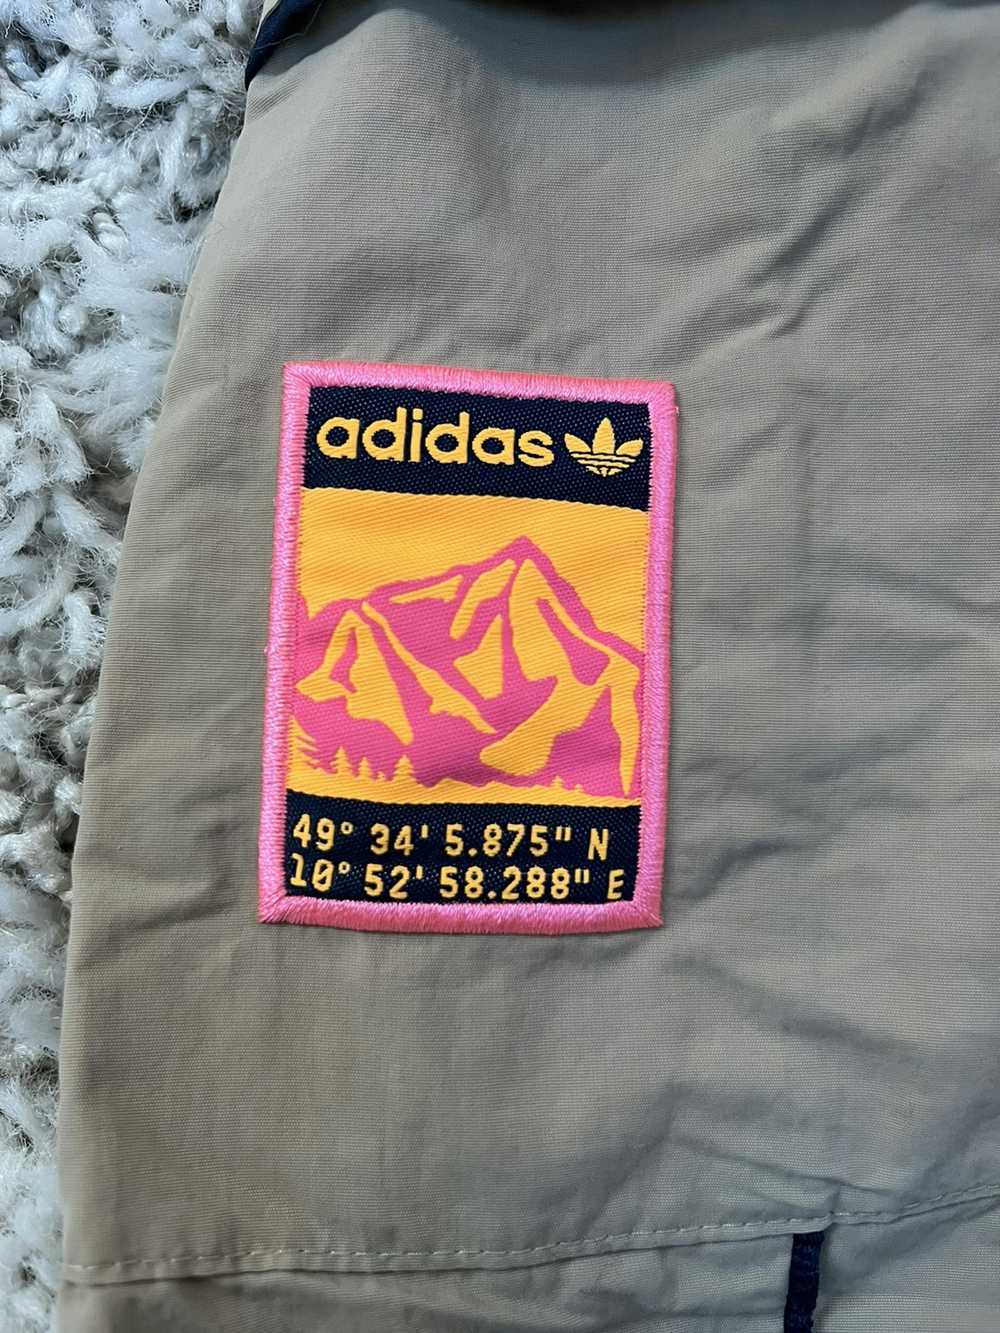 Adidas Adidas Track Pants - image 4